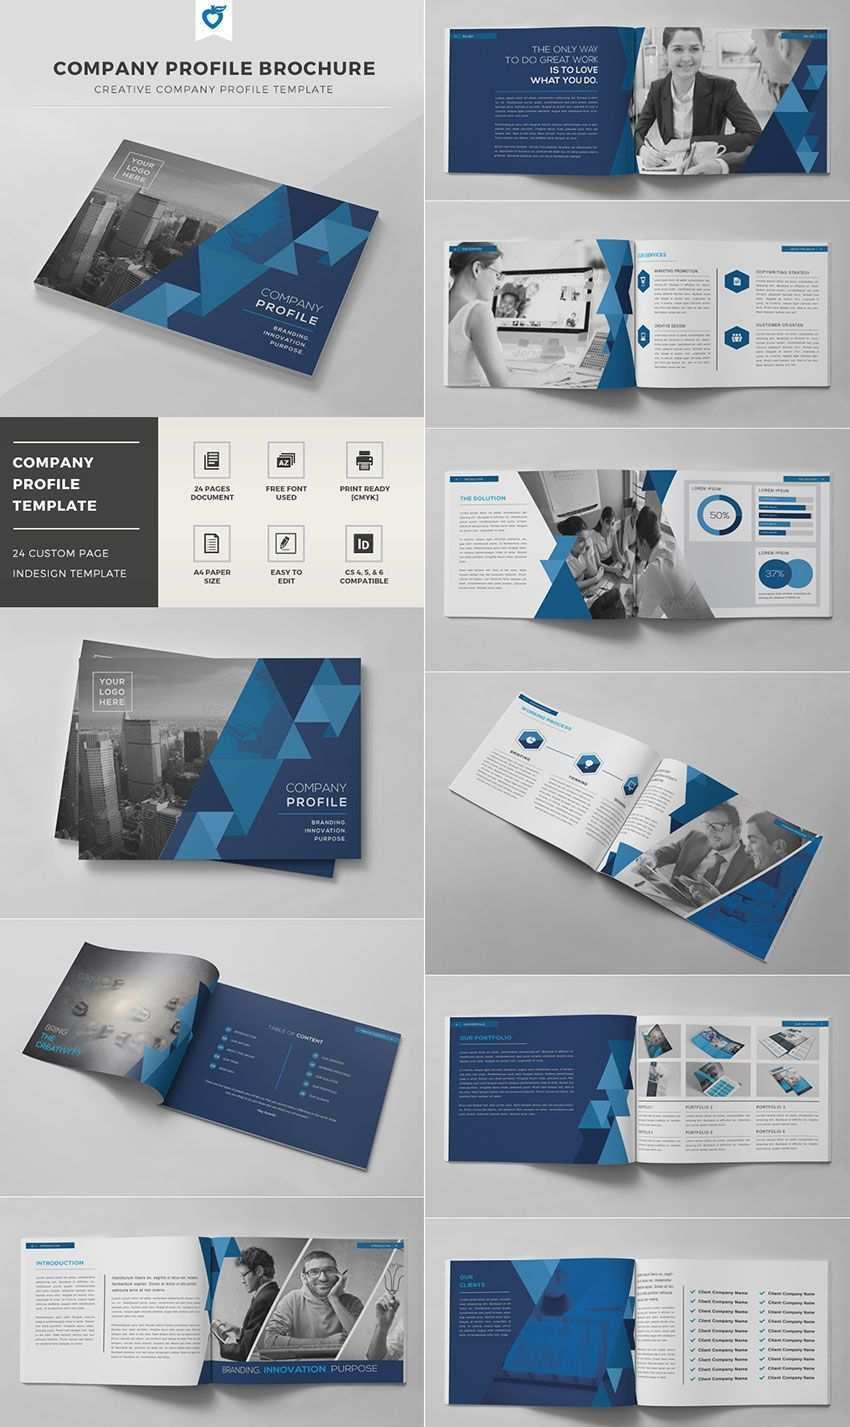 Pin By Chuck On Diseno Grafico Indesign Brochure Templates Company Profile Design Brochure Design Layout